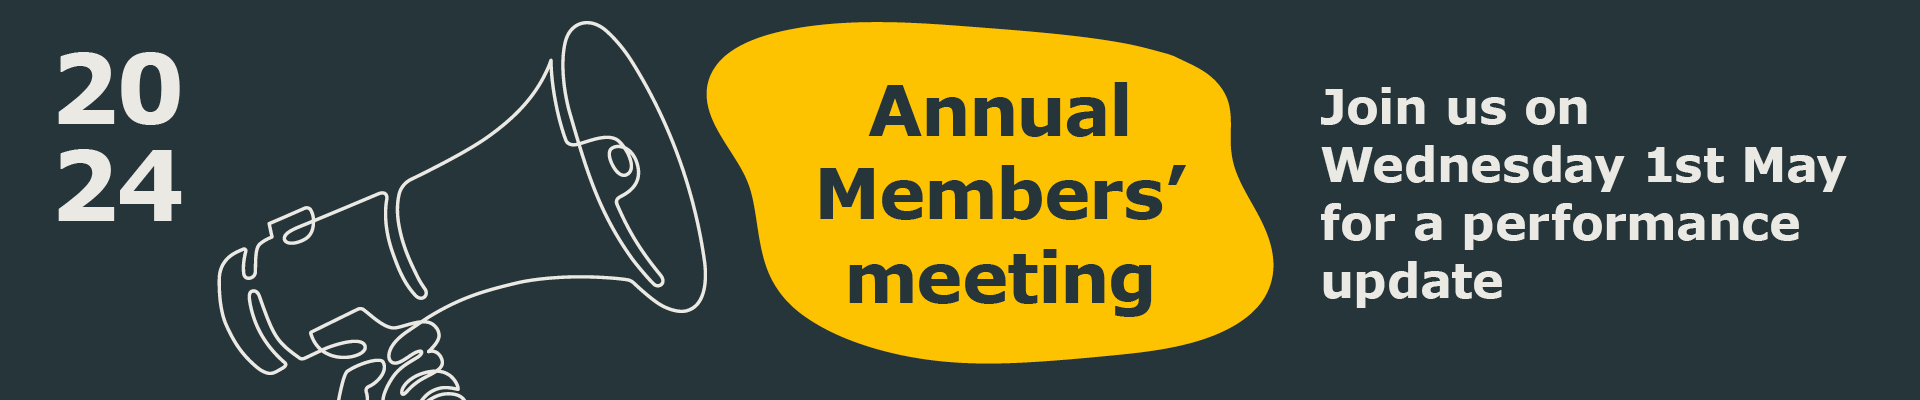 Annual Members meeting